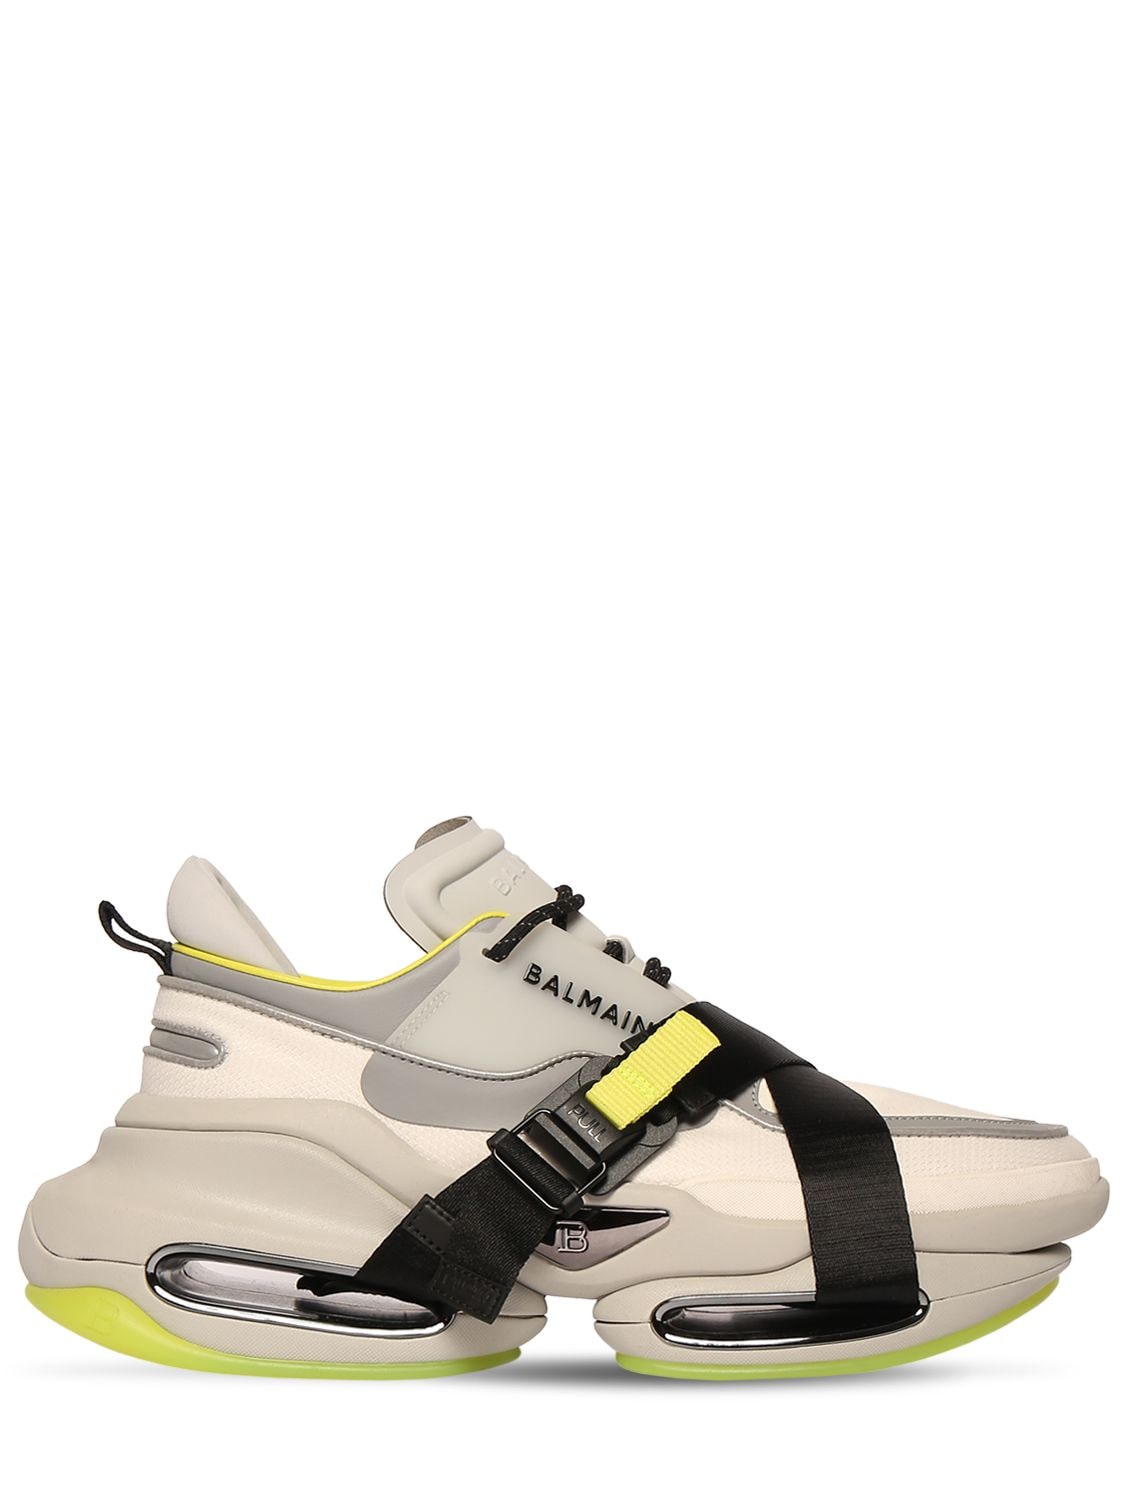 Balmain - B bold low leather & nylon sneakers - White/Yellow | Luisaviaroma